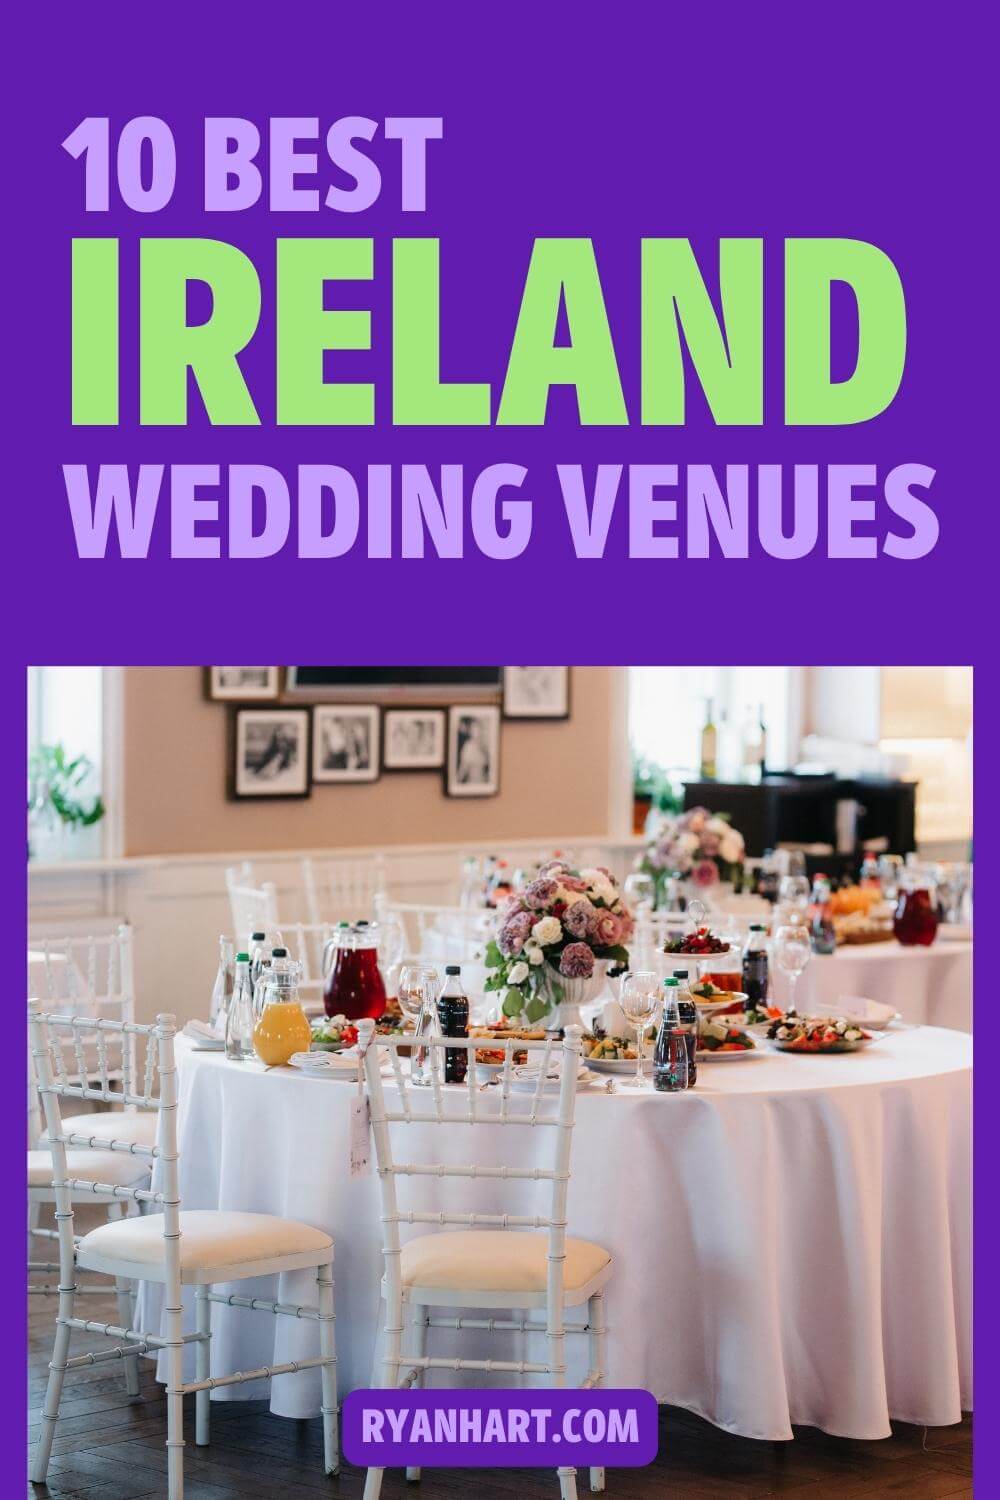 Getting married in Ireland